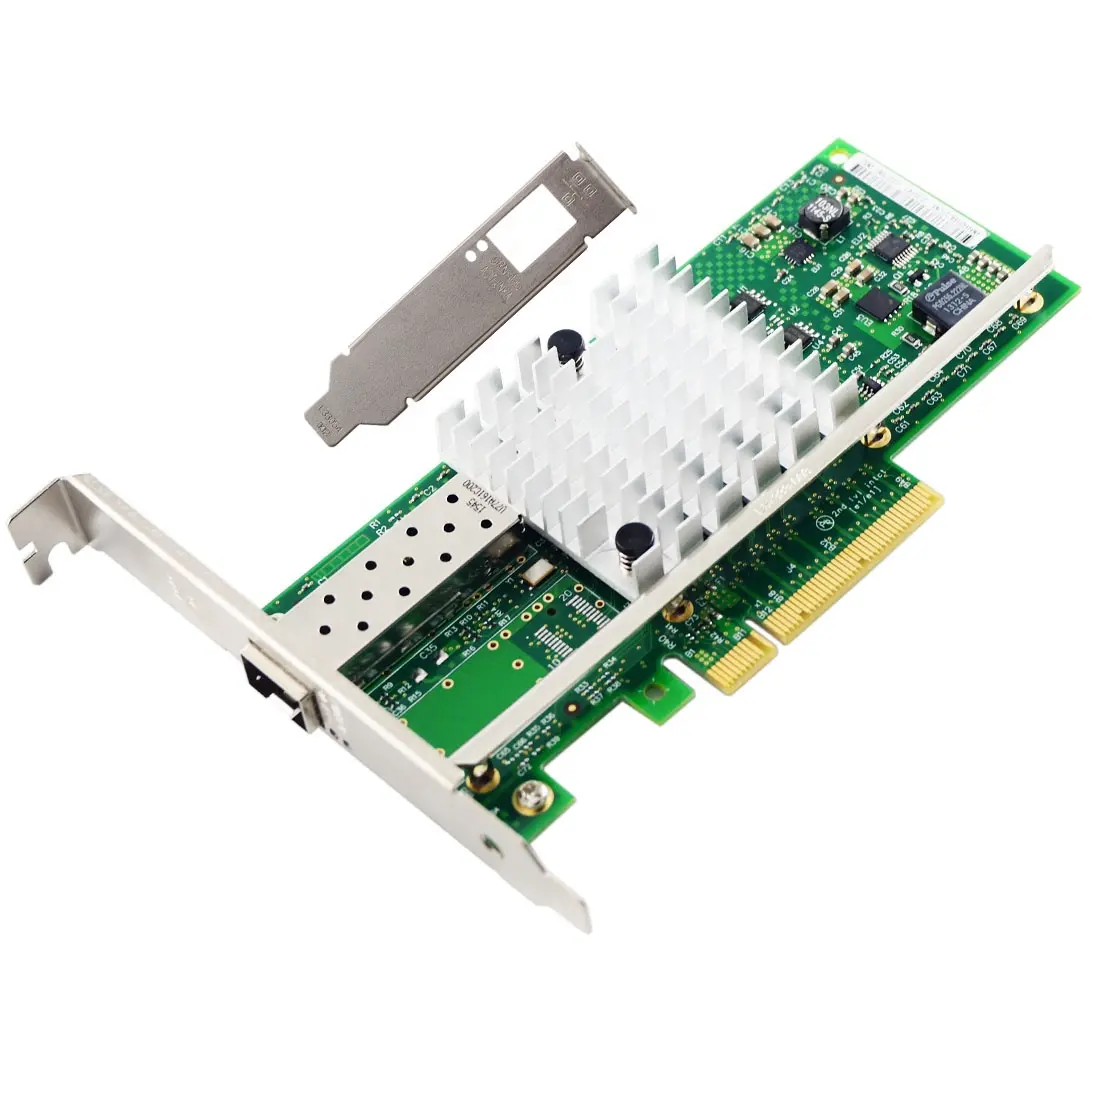 इंटेल 82599EN चिप 10GB एकल बंदरगाह SFP + PCI एक्सप्रेस X8 नेटवर्क कार्ड E10G41BTDA X520-DA1